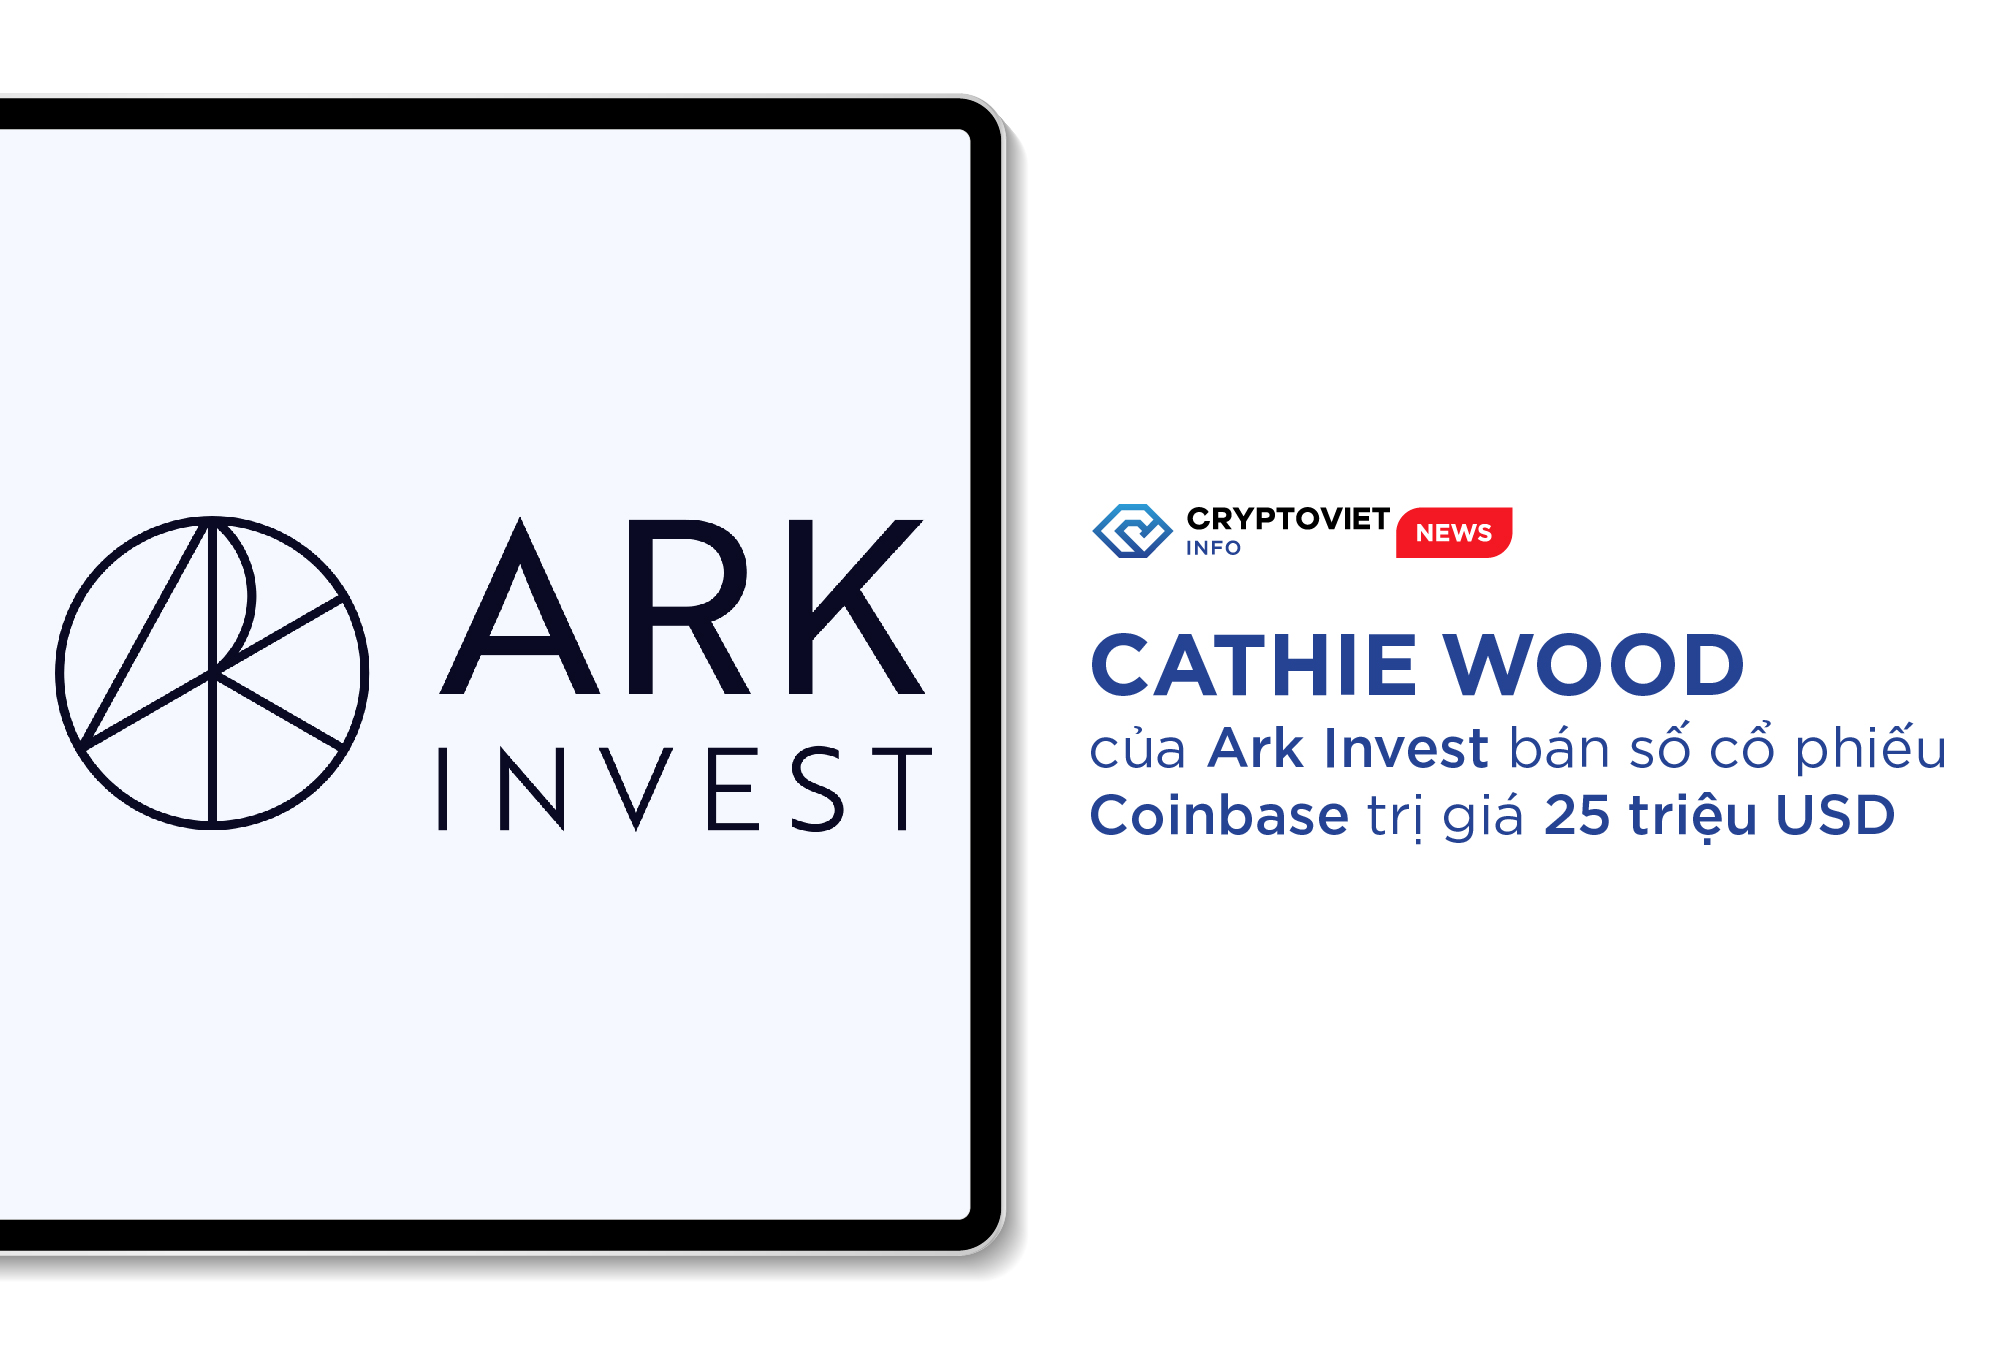 Cathie Wood của Ark Invest bán số cổ phiếu Coinbase trị giá 25 triệu USD